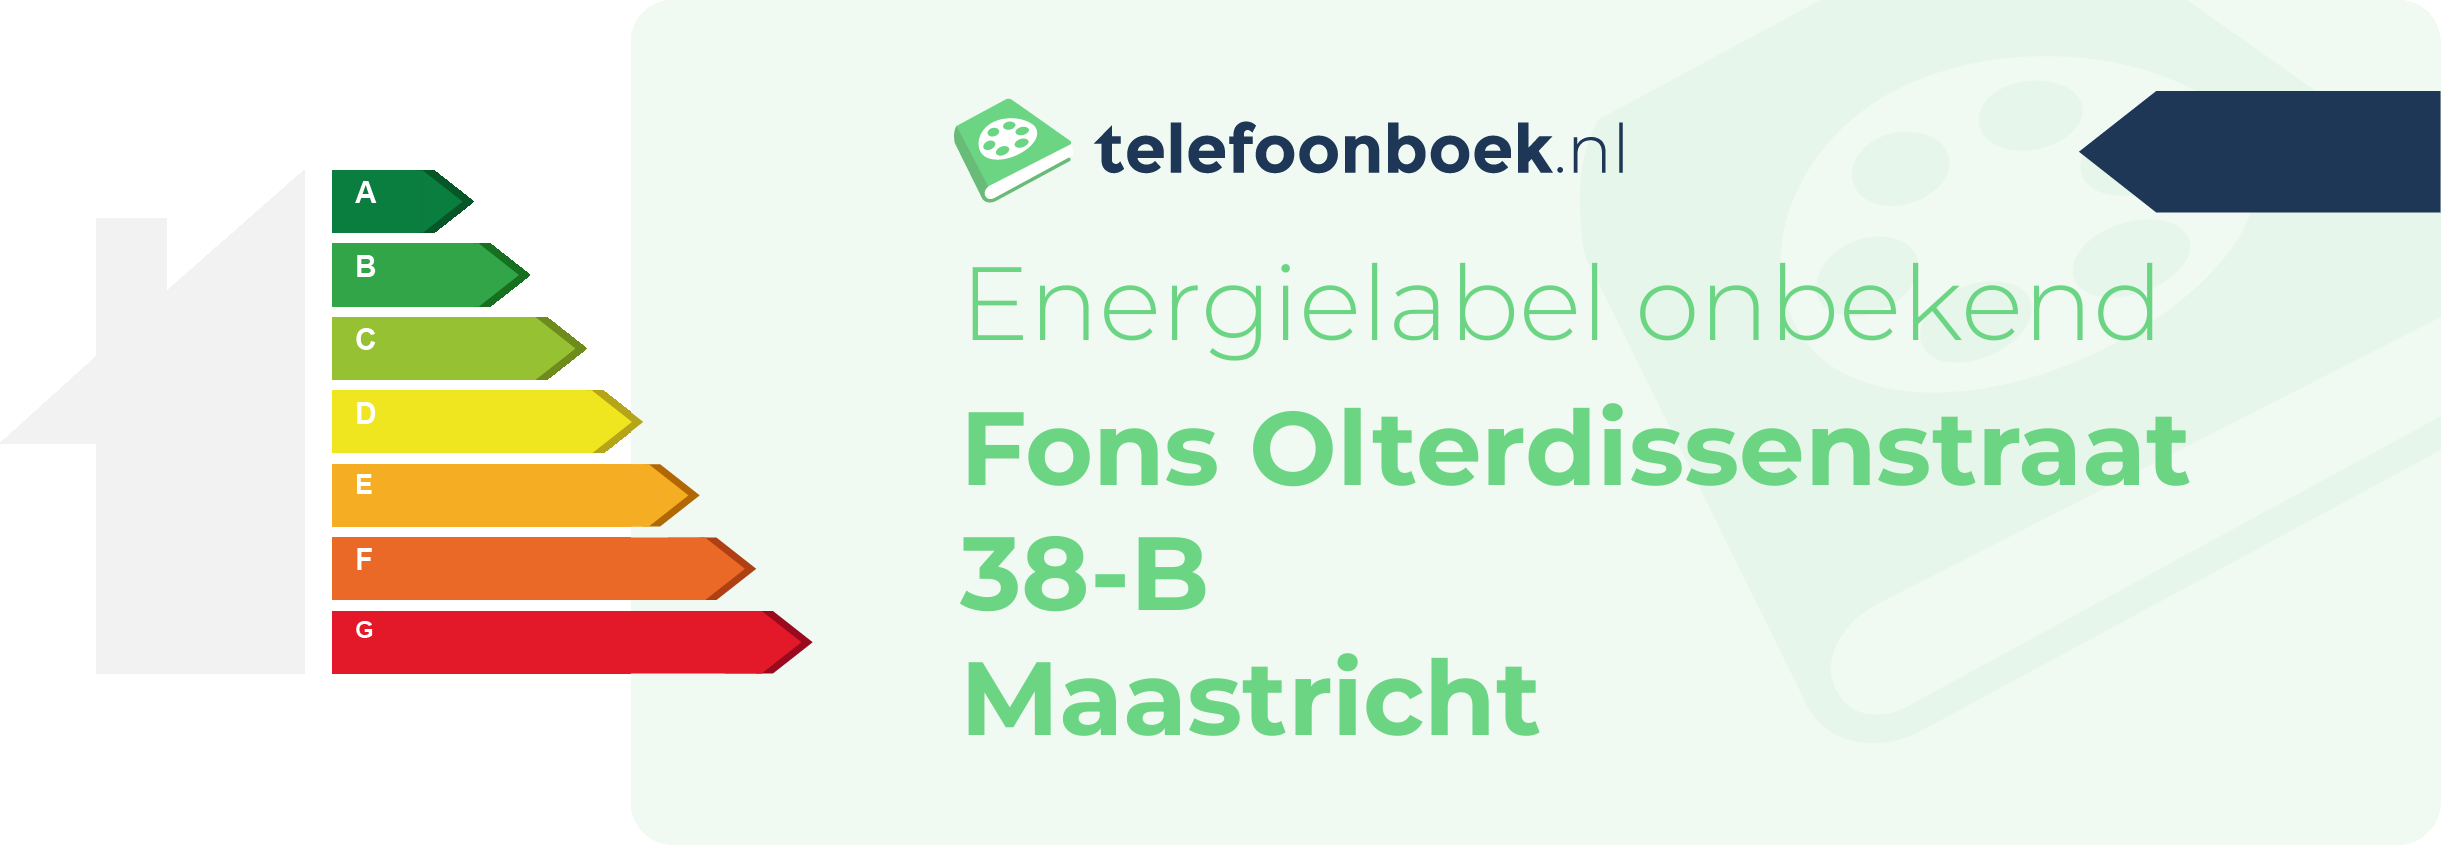 Energielabel Fons Olterdissenstraat 38-B Maastricht